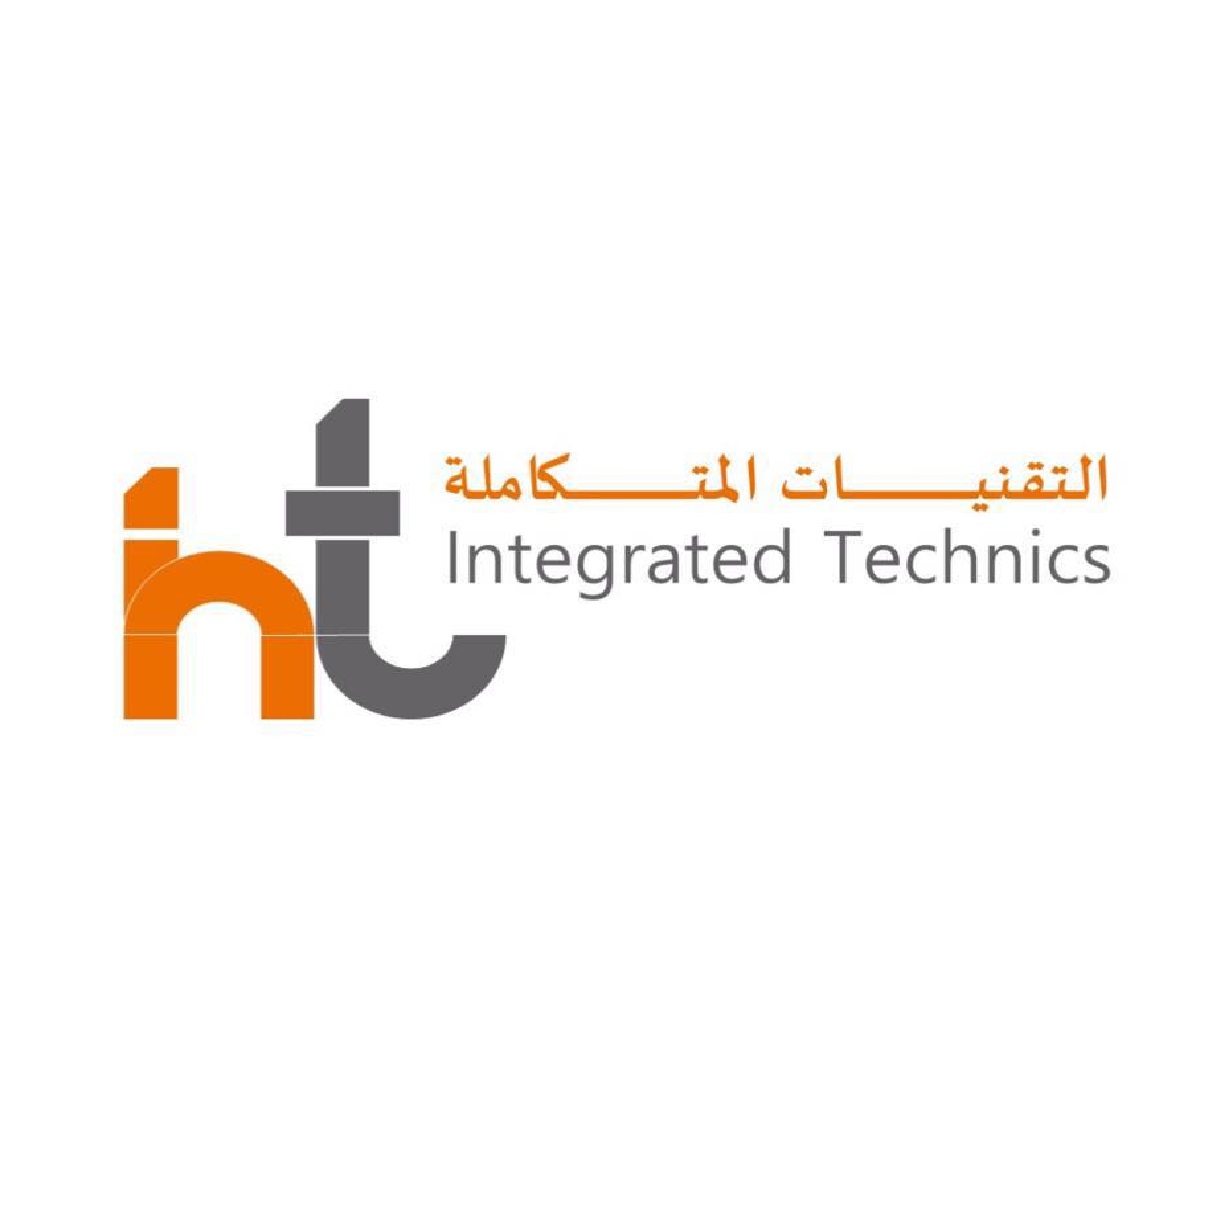 Integrated Technics